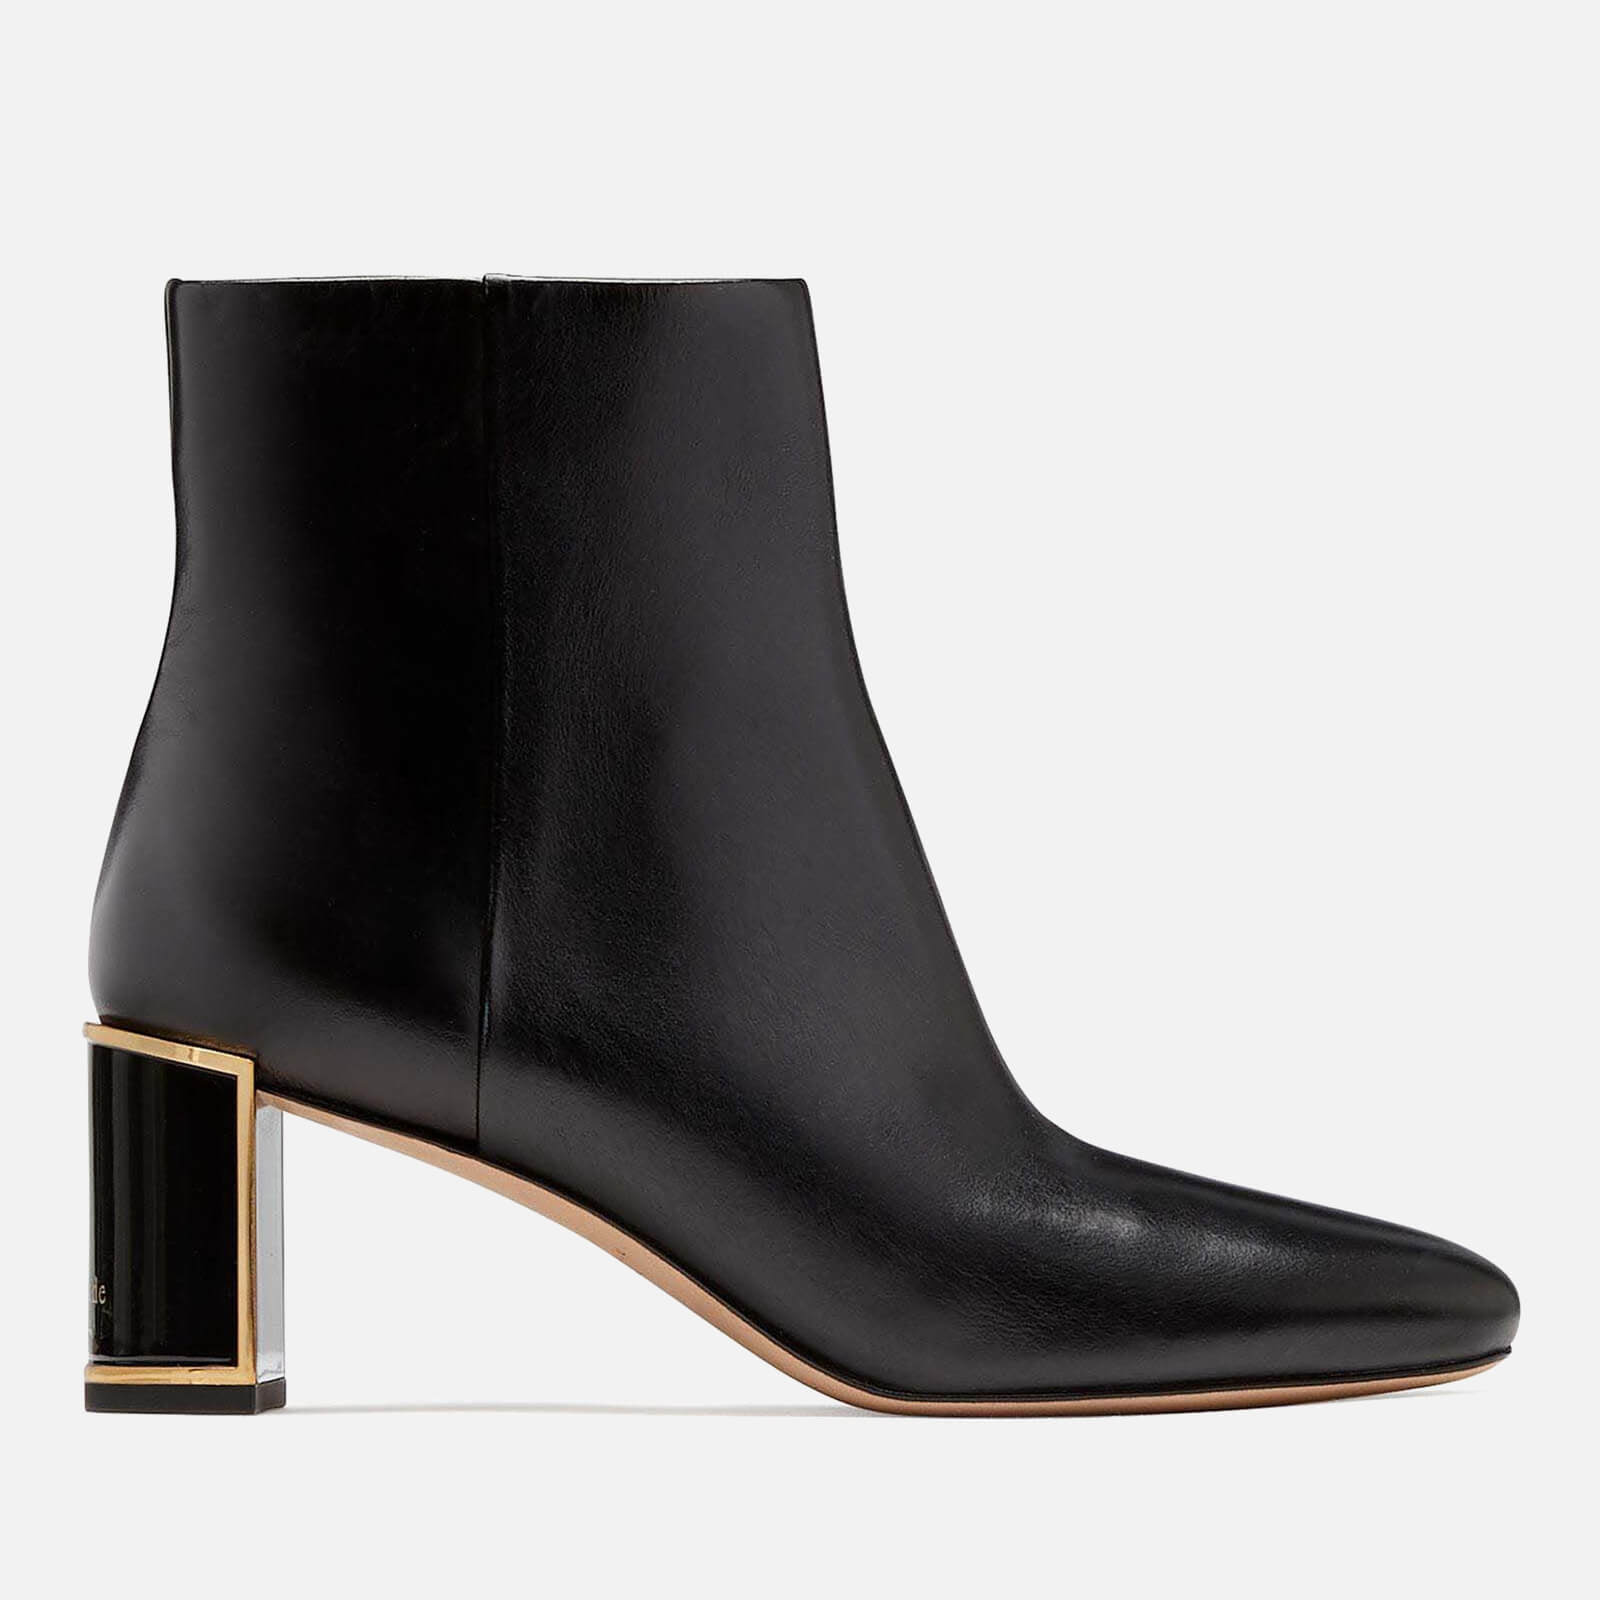 Kate Spade New York Women’s Merritt Leather Heeled Boots